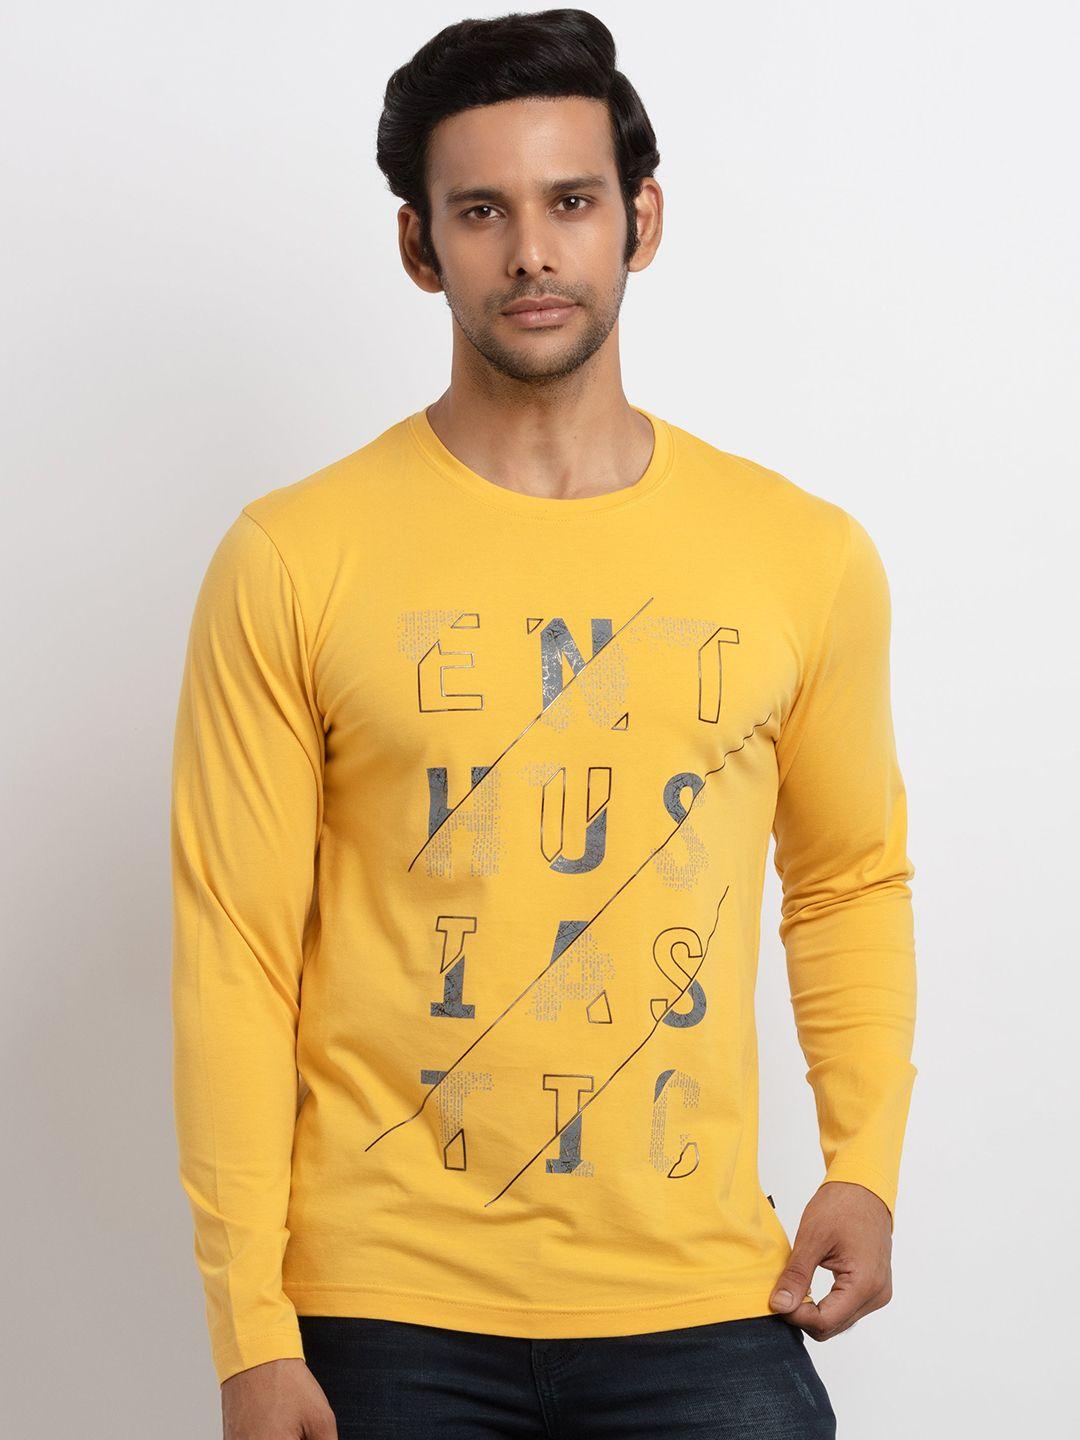 status quo men gold-toned typography printed applique t-shirt